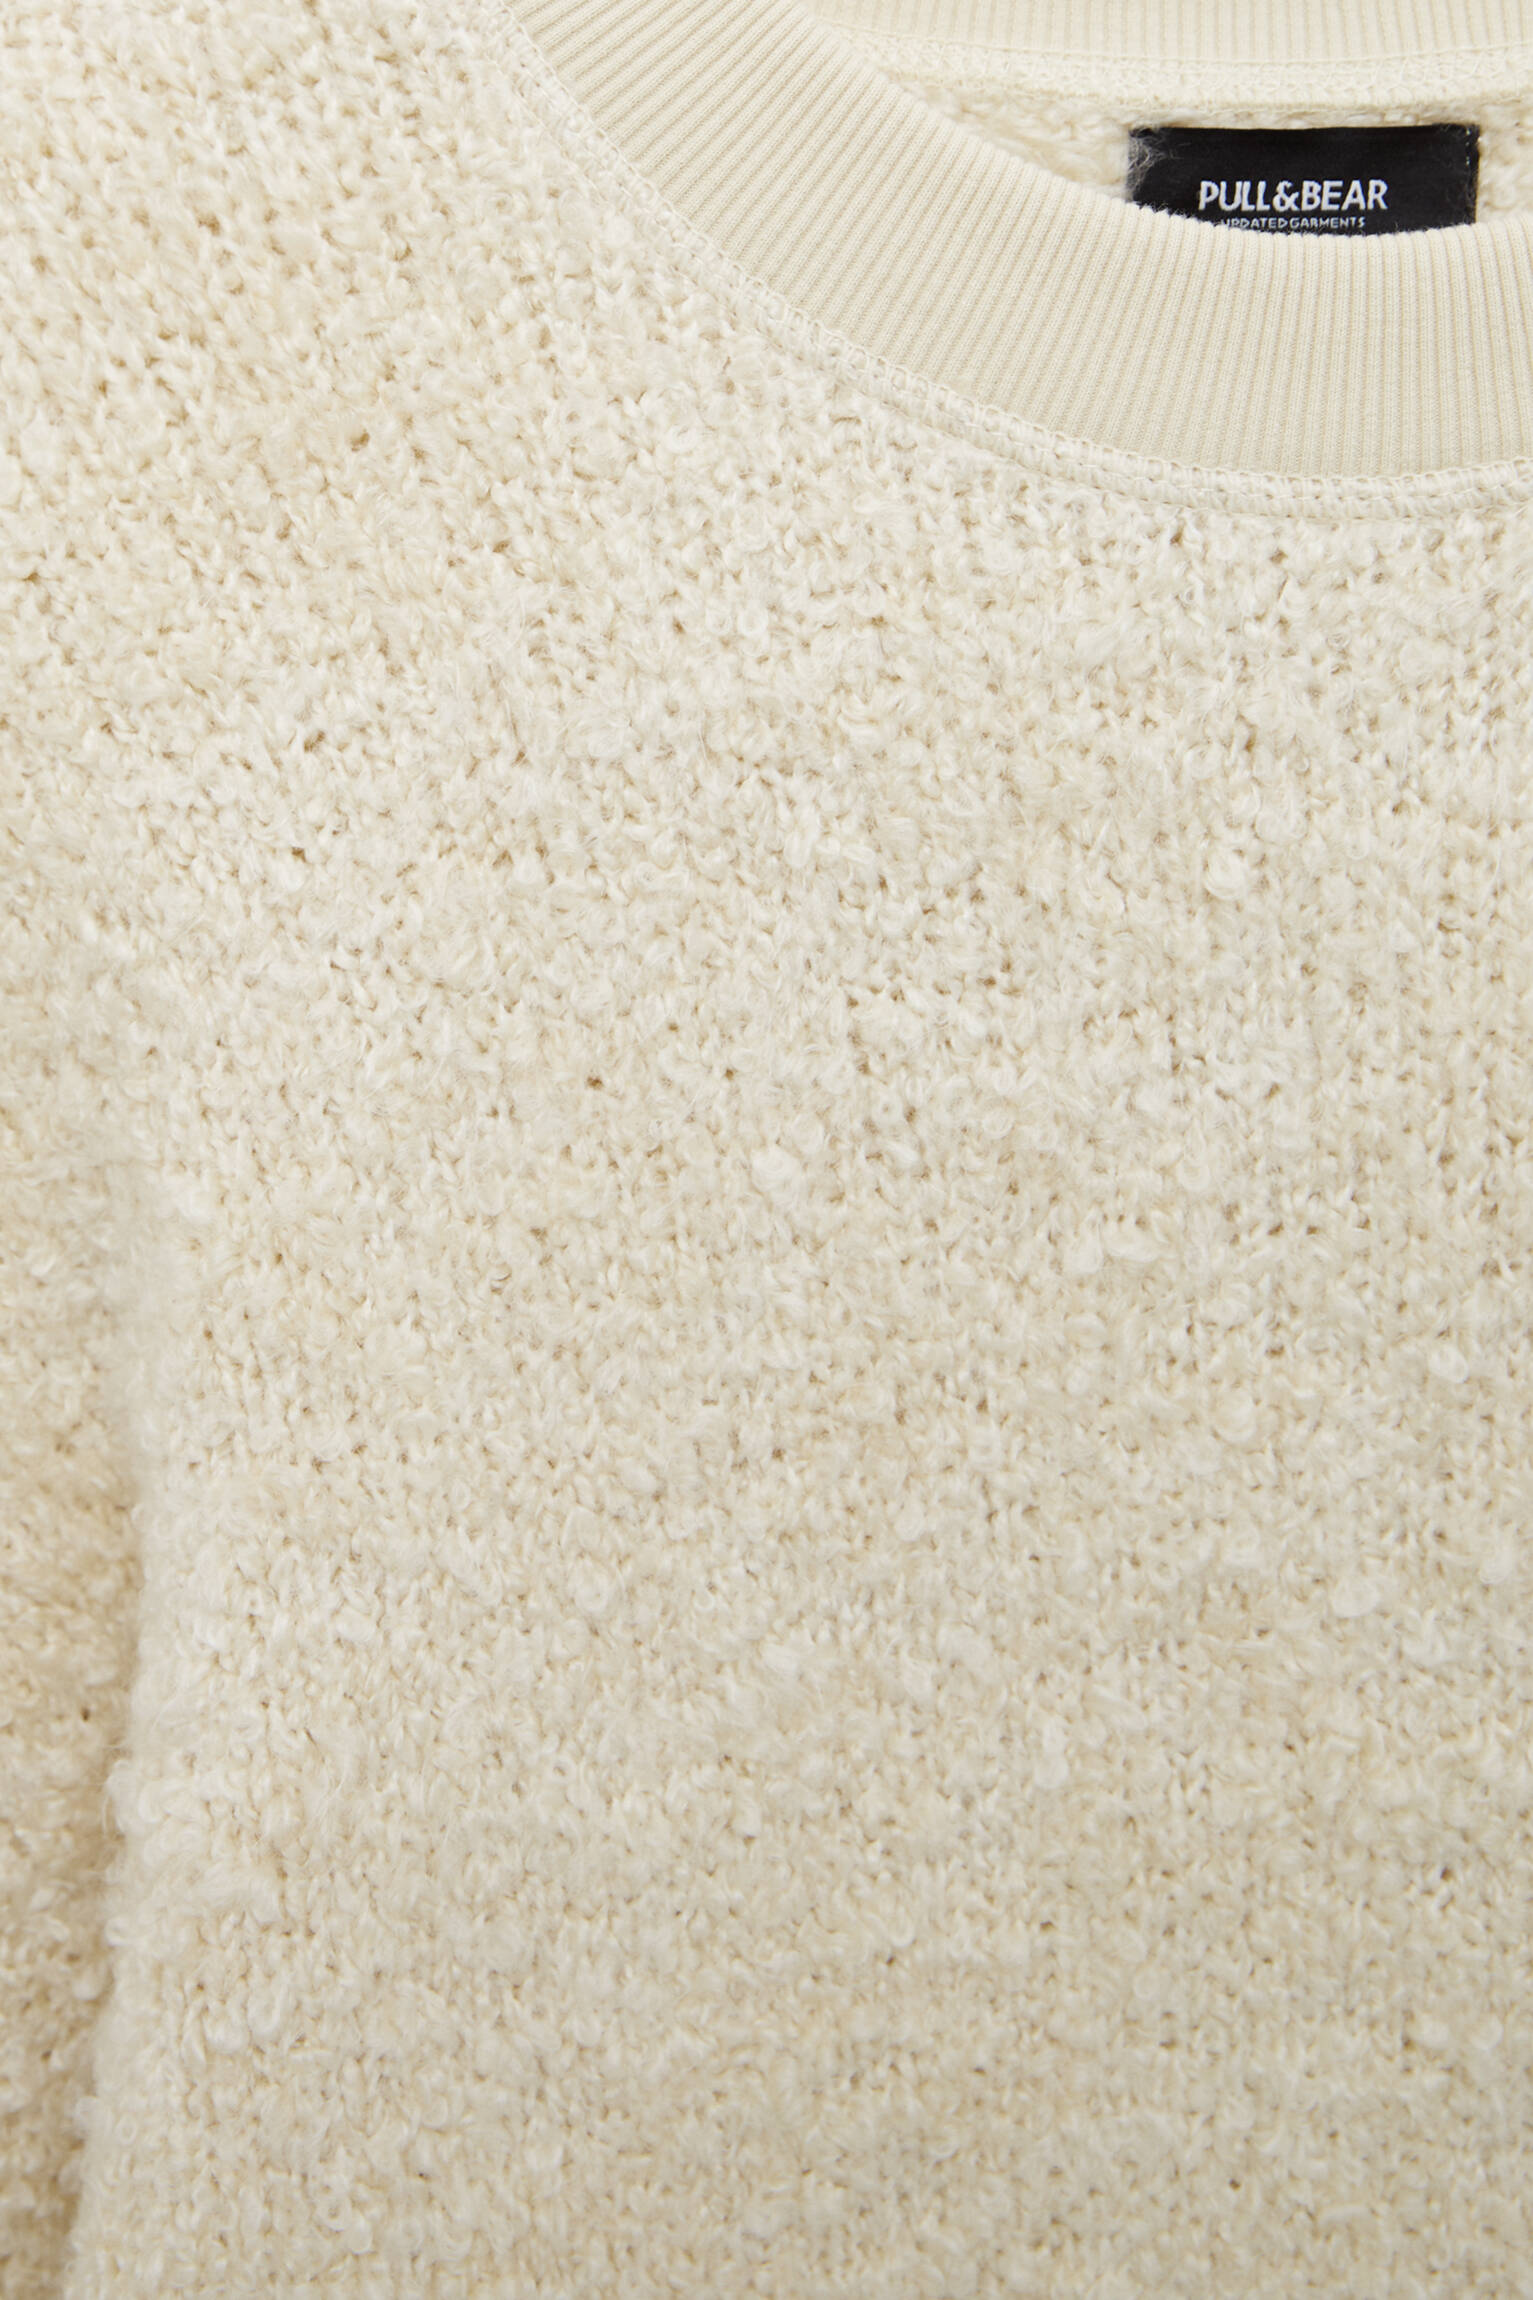 Pull & Bear - Faux shearling sweater